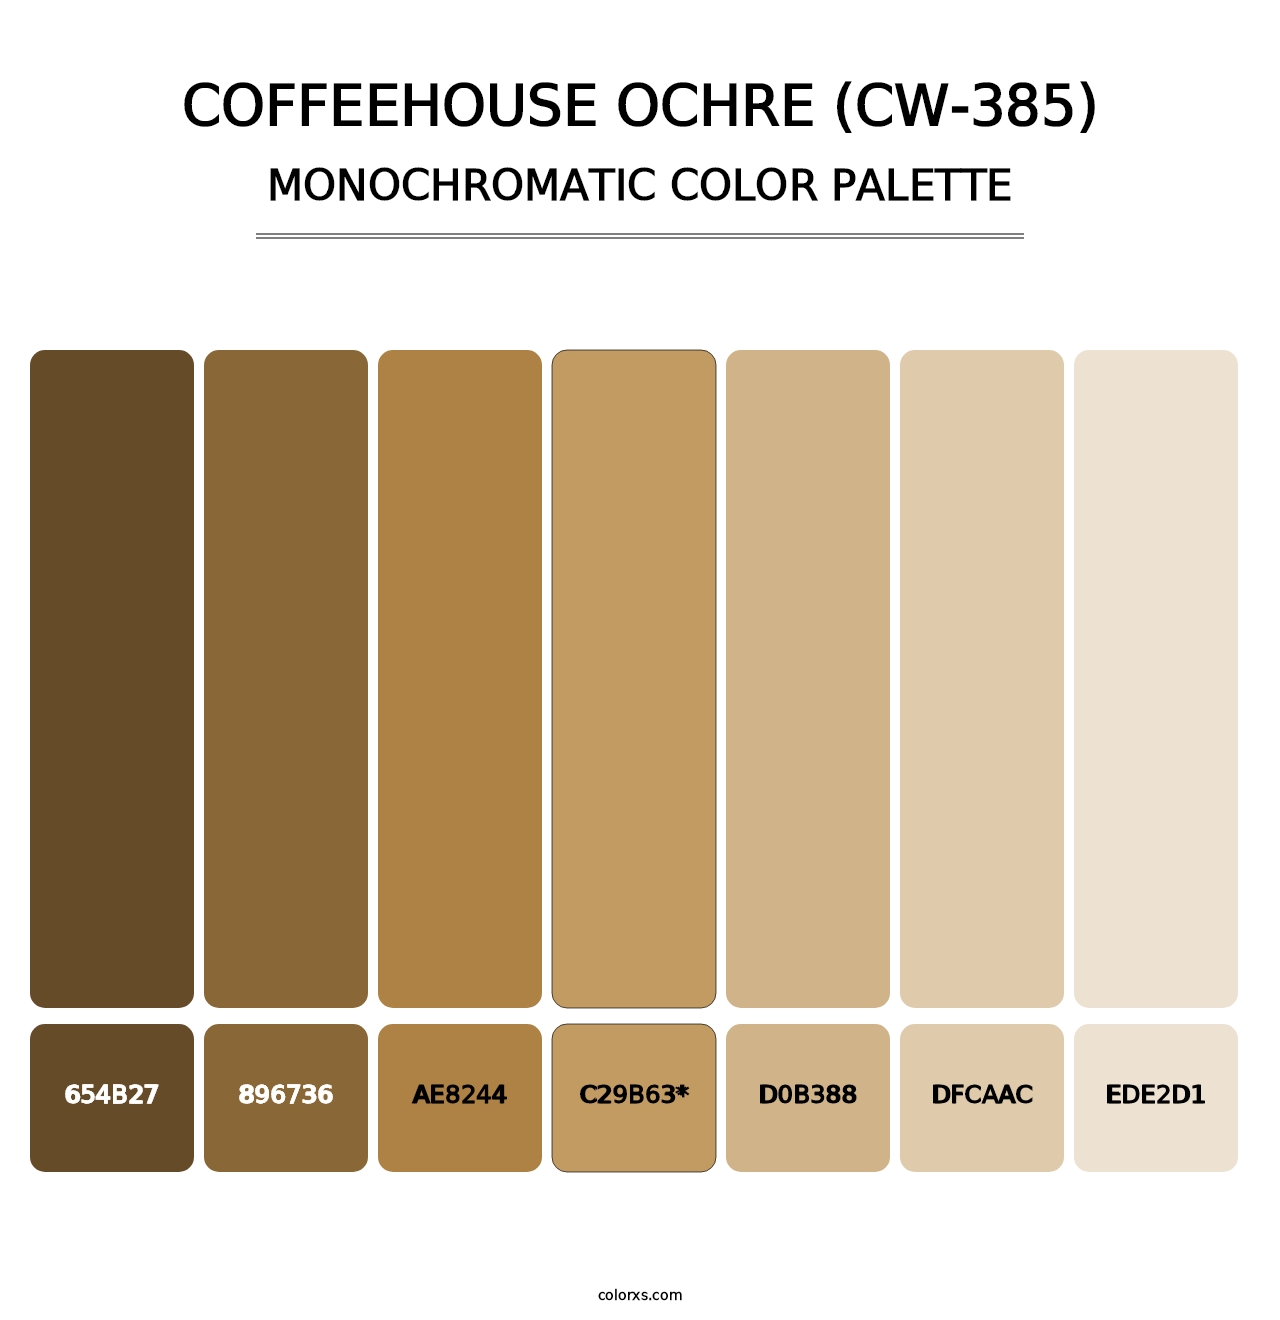 Coffeehouse Ochre (CW-385) - Monochromatic Color Palette